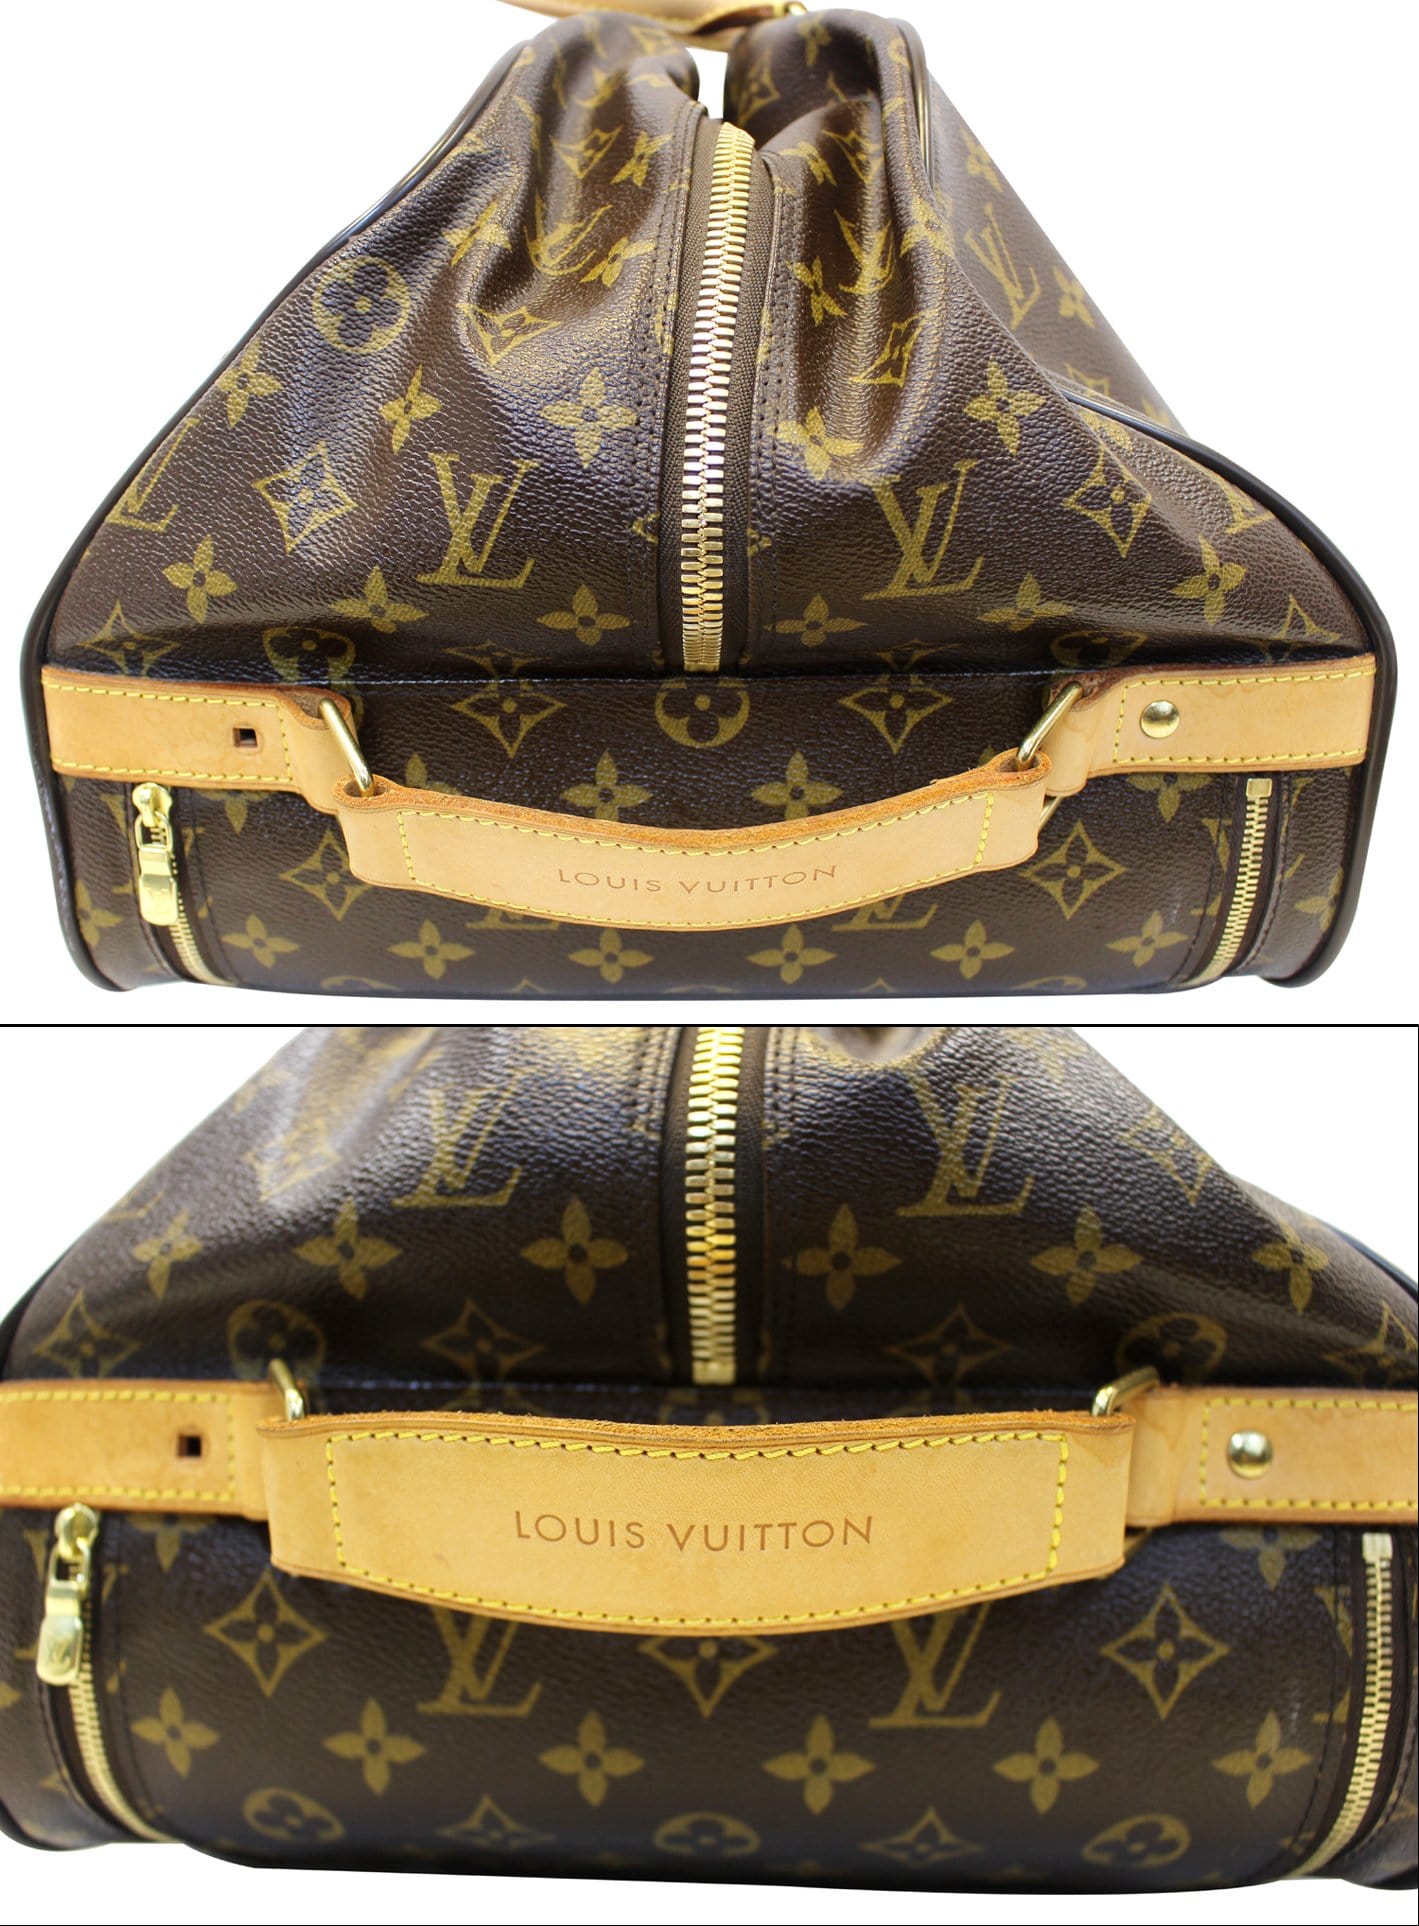 LV Louis Vuitton Eole 50 Rolling Luggage Monogram